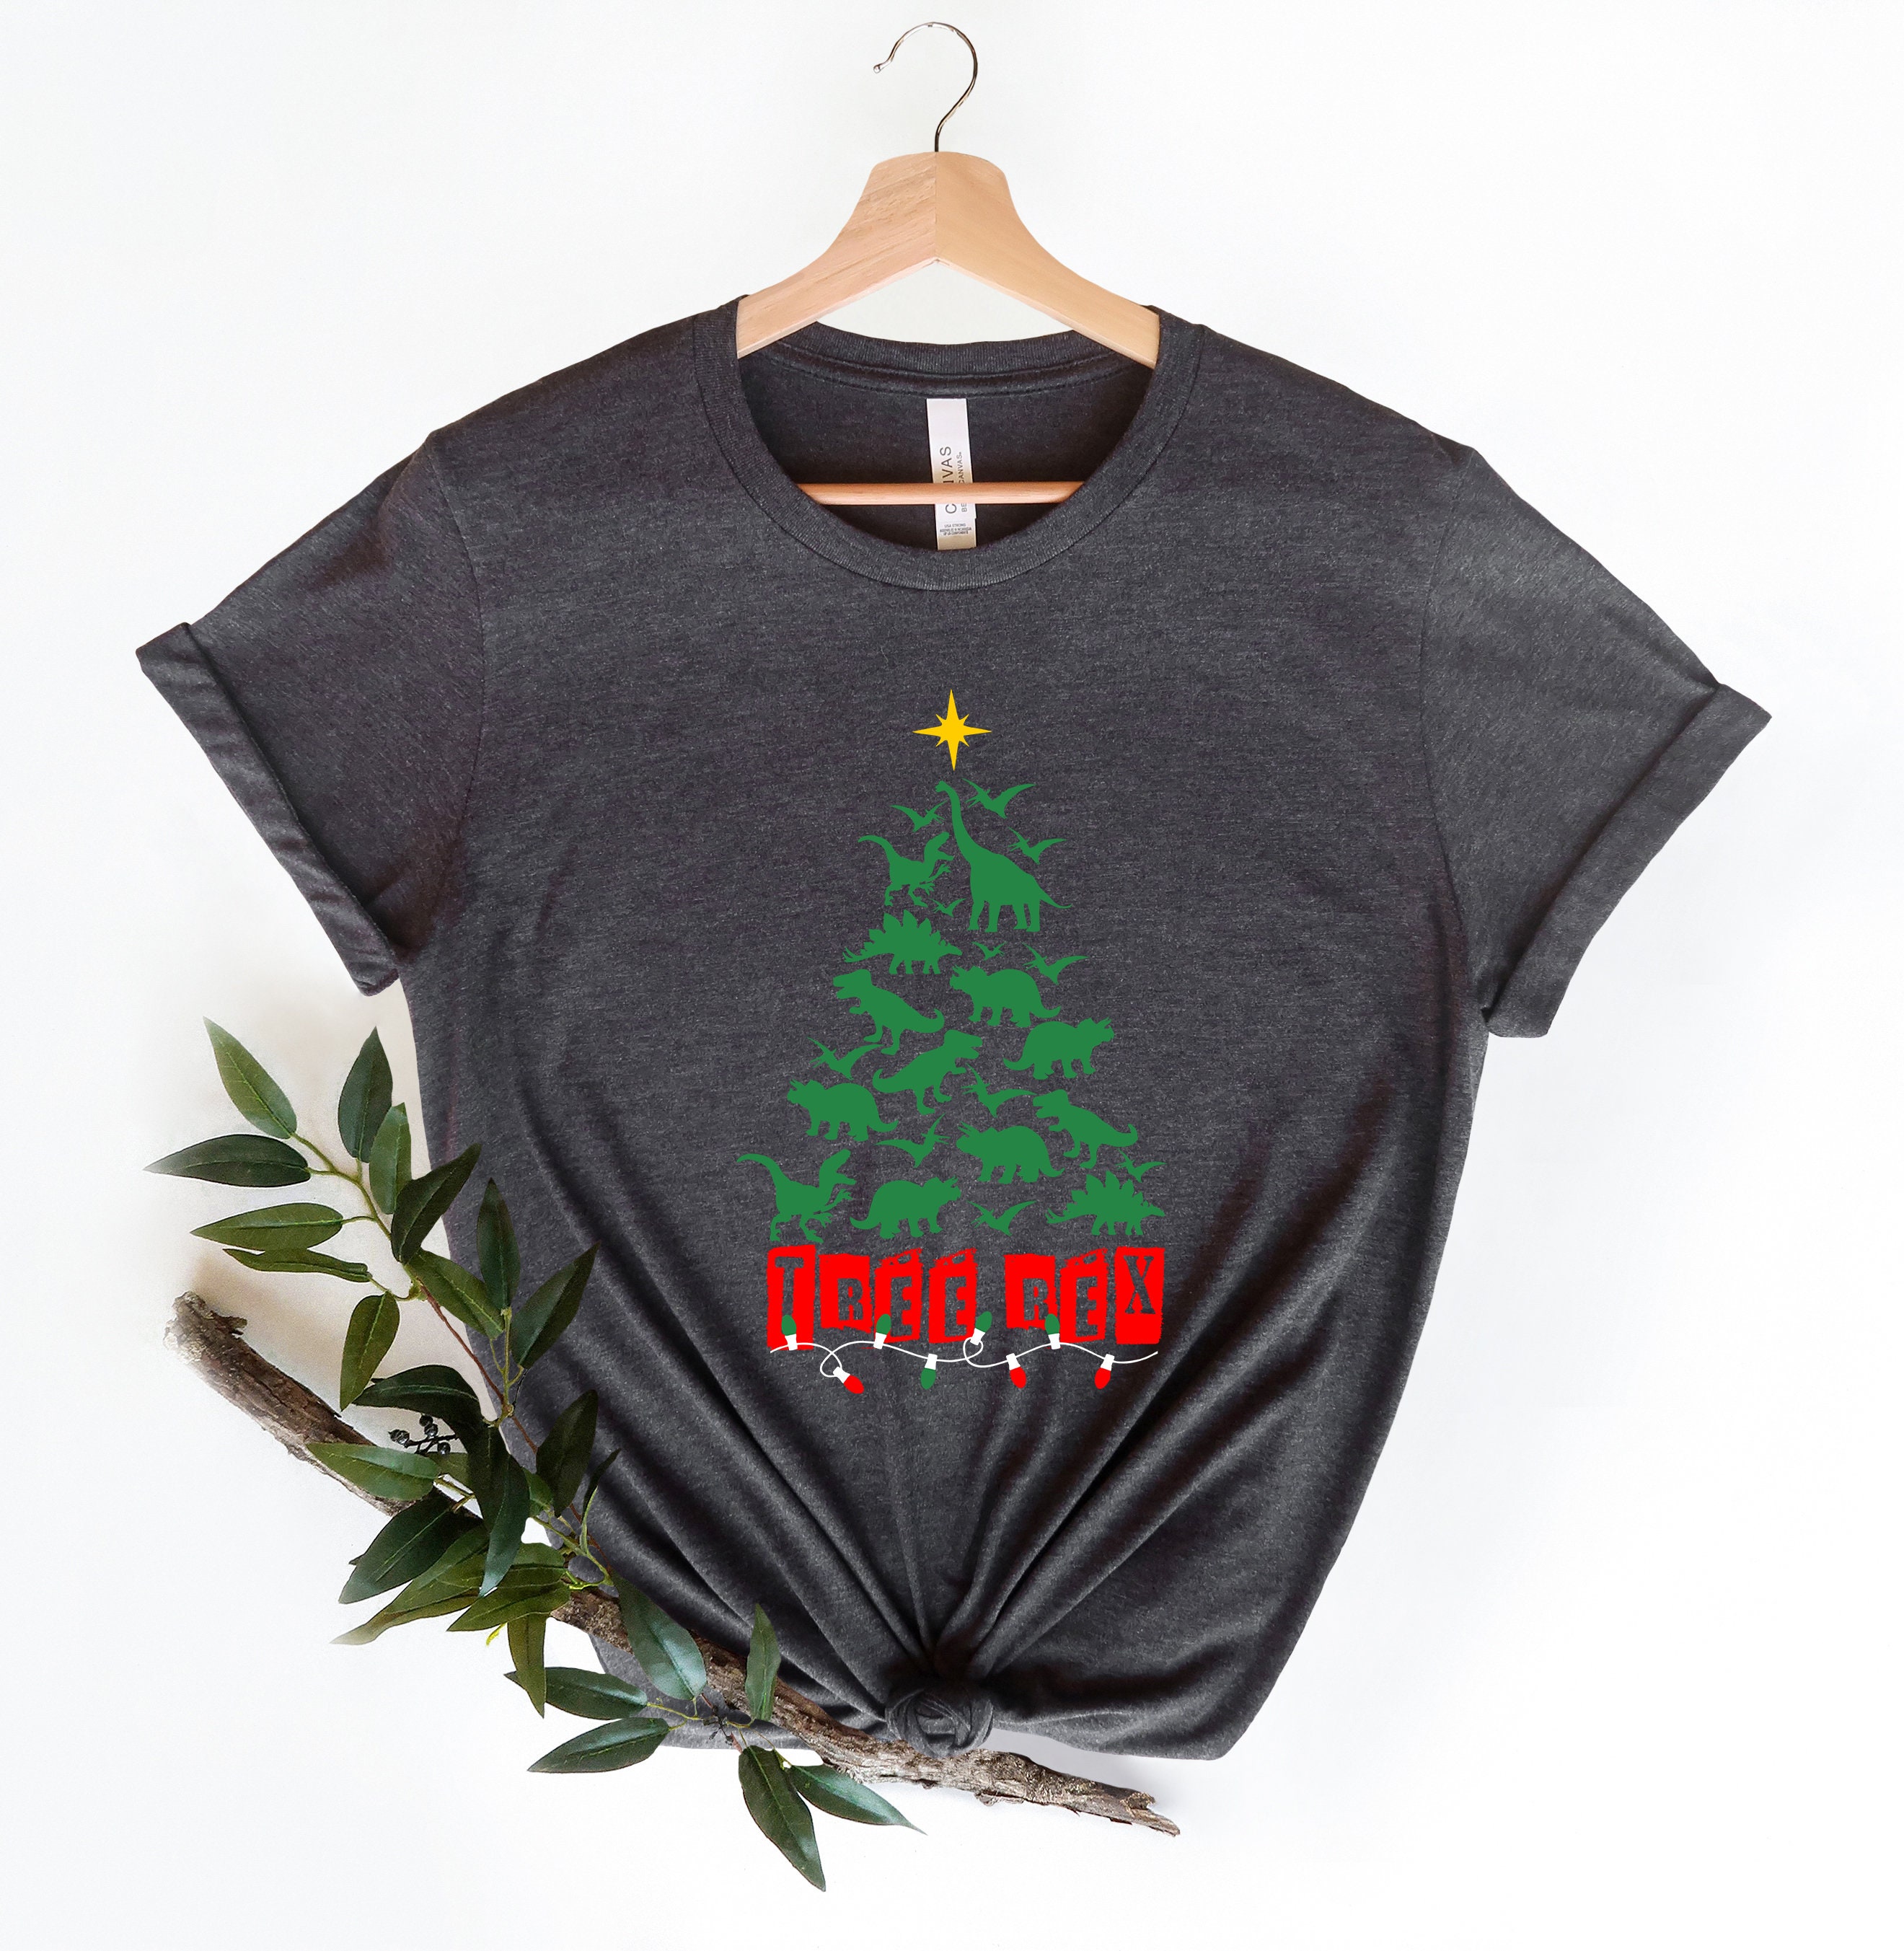 Discover Tree Rex Shirt, Christmas Dinosaur Shirt, Dinosaur Santa, Jurassic Christmas, Dinosaur at Xmas,Cute Dino Outfit, Xmas Tree Shirt,